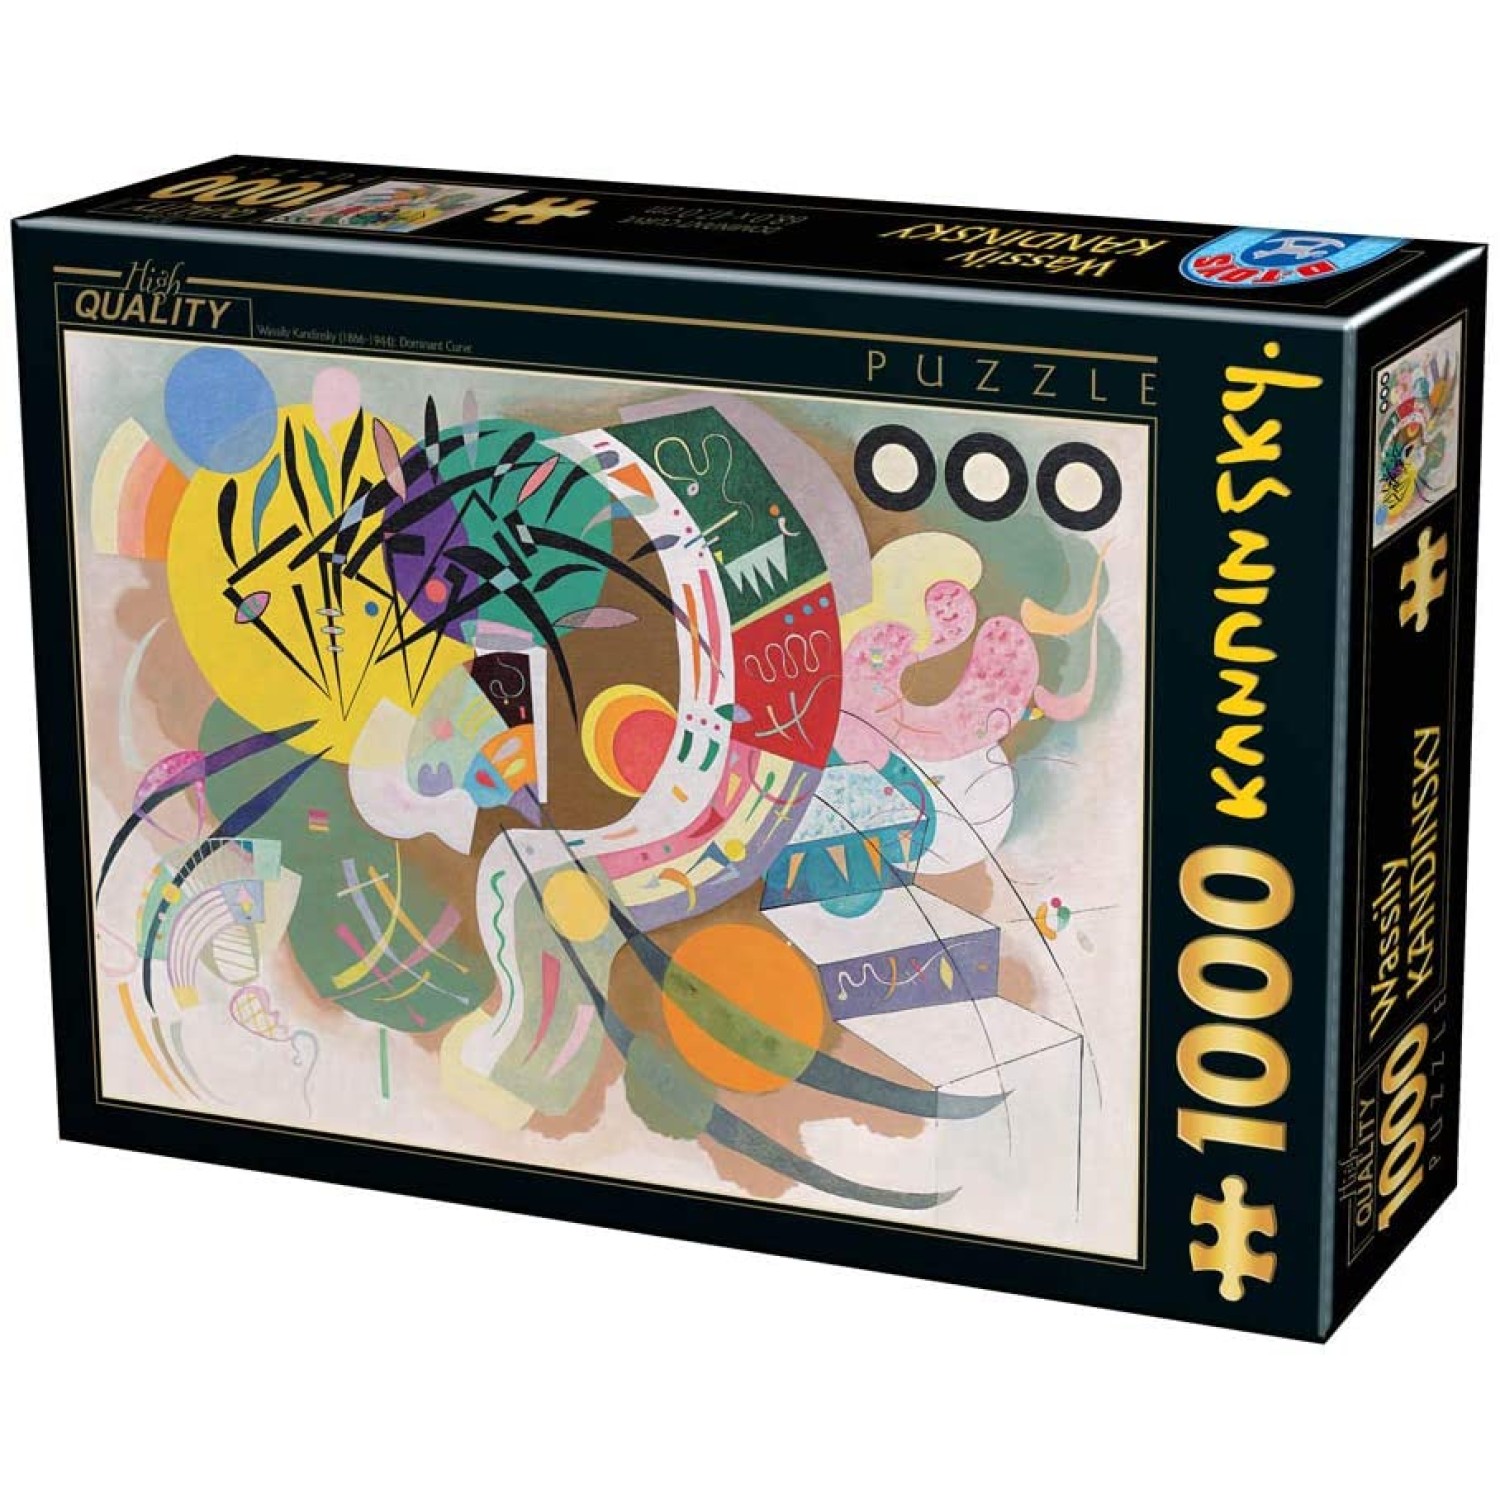 D-Toys Puzzles - Dominant Curve 1000 Piece Jigsaw Puzzle - 26.75 x 18.5 Inch Puzzle